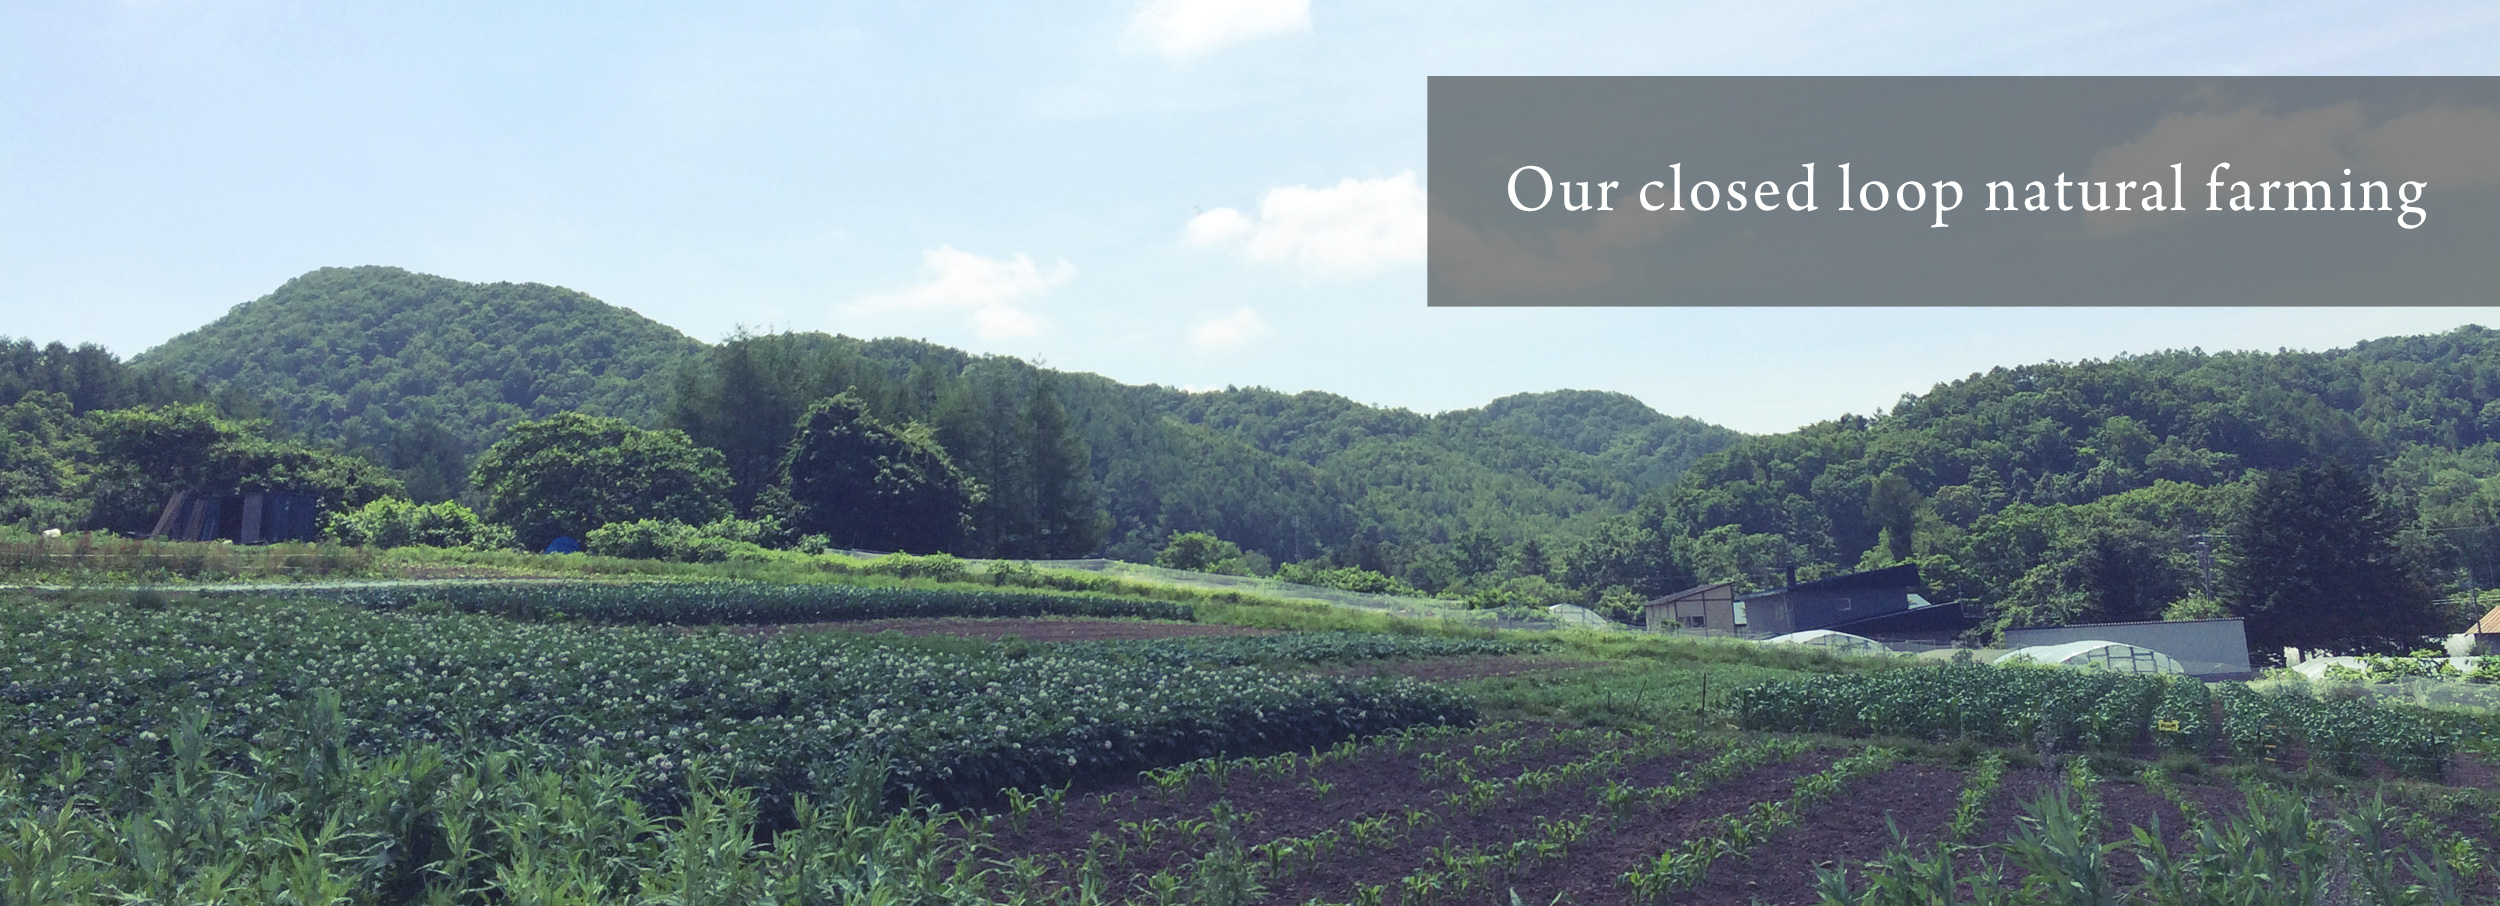 Our closed loop natural farming